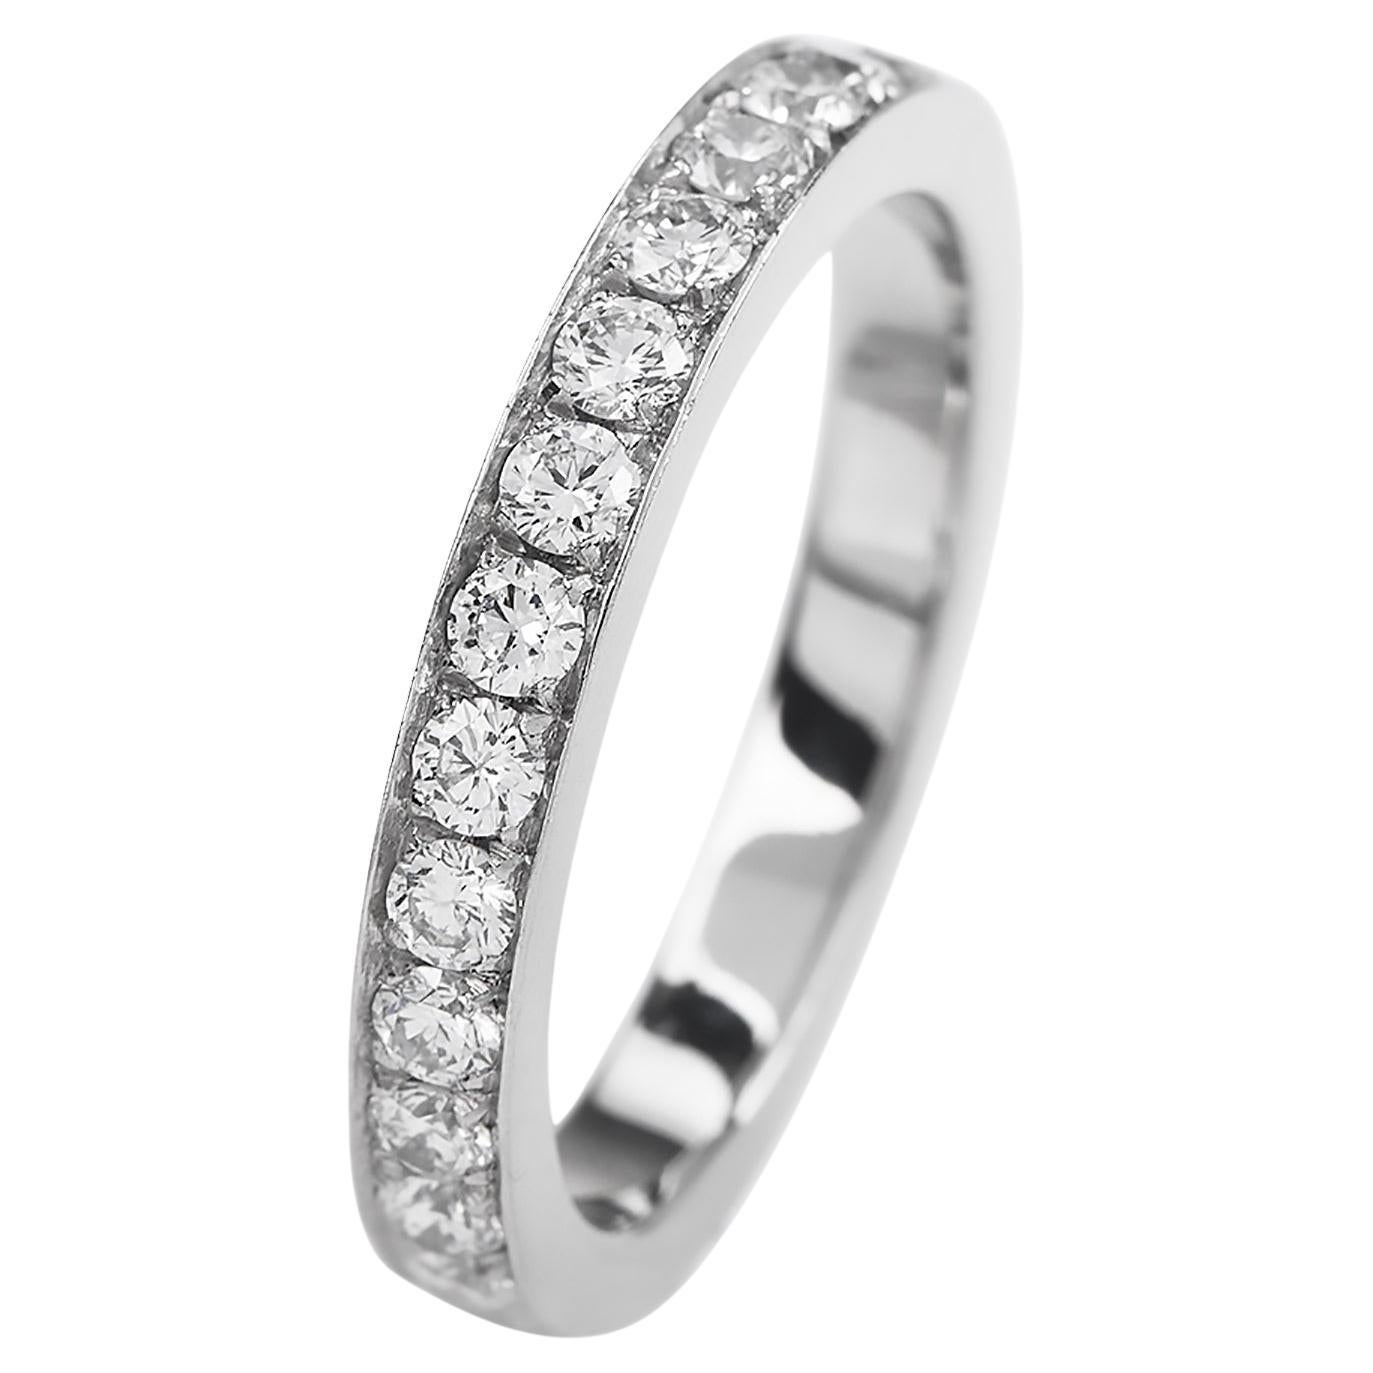 Estate Round Cut Diamond Platinum Eternity Wedding Band Ring